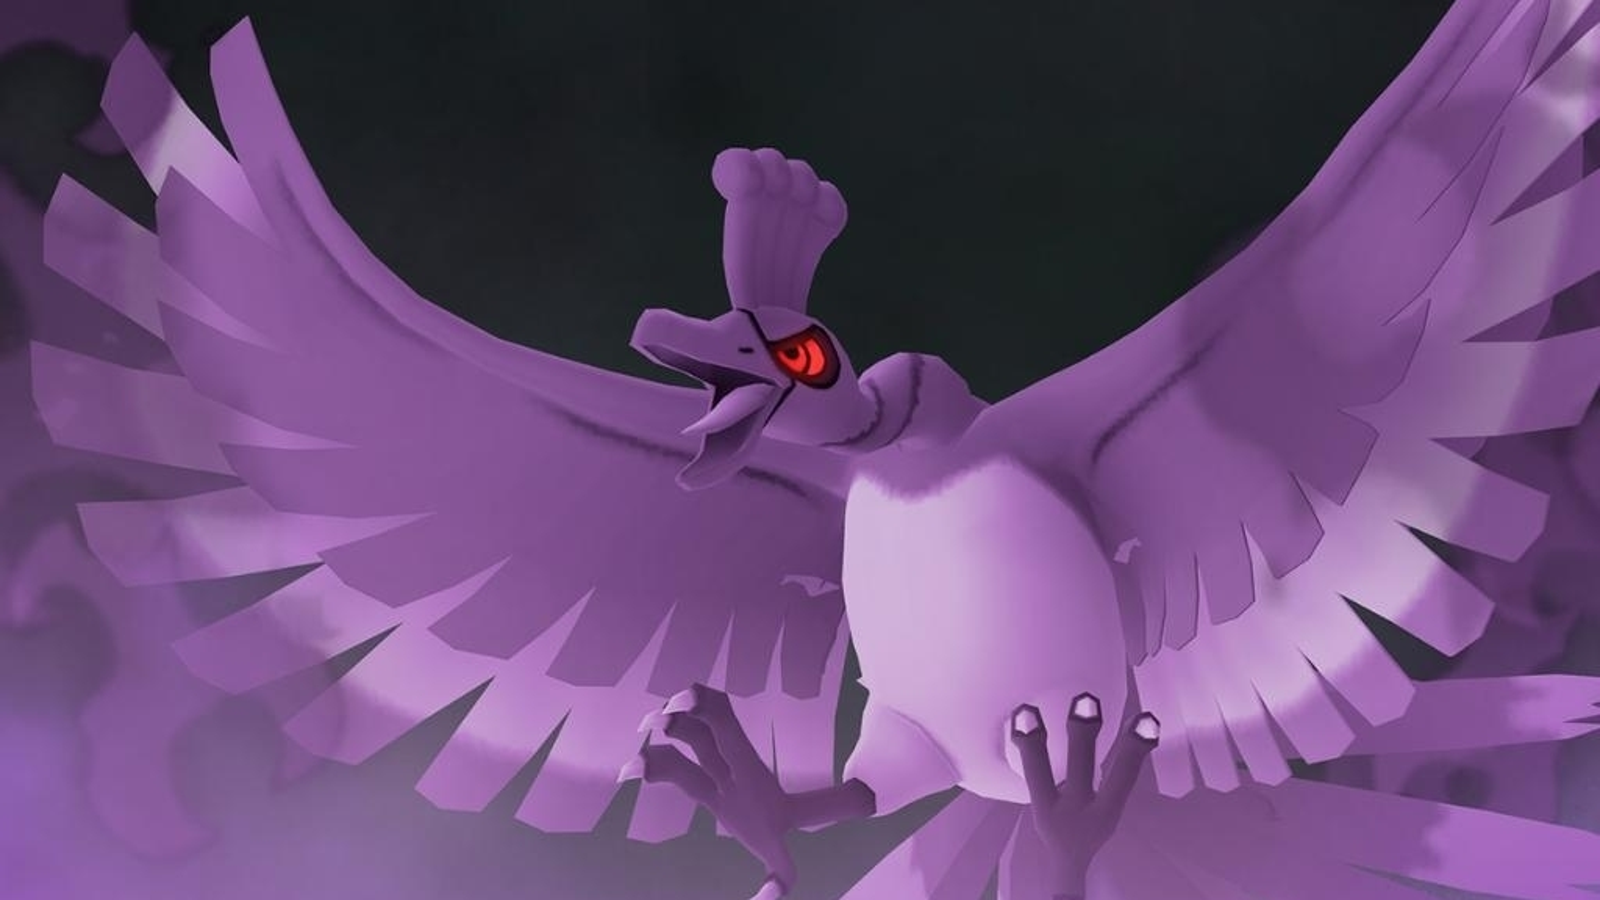 Pokémon Go 'Showdown in the Shadows' quest steps, rewards - Polygon